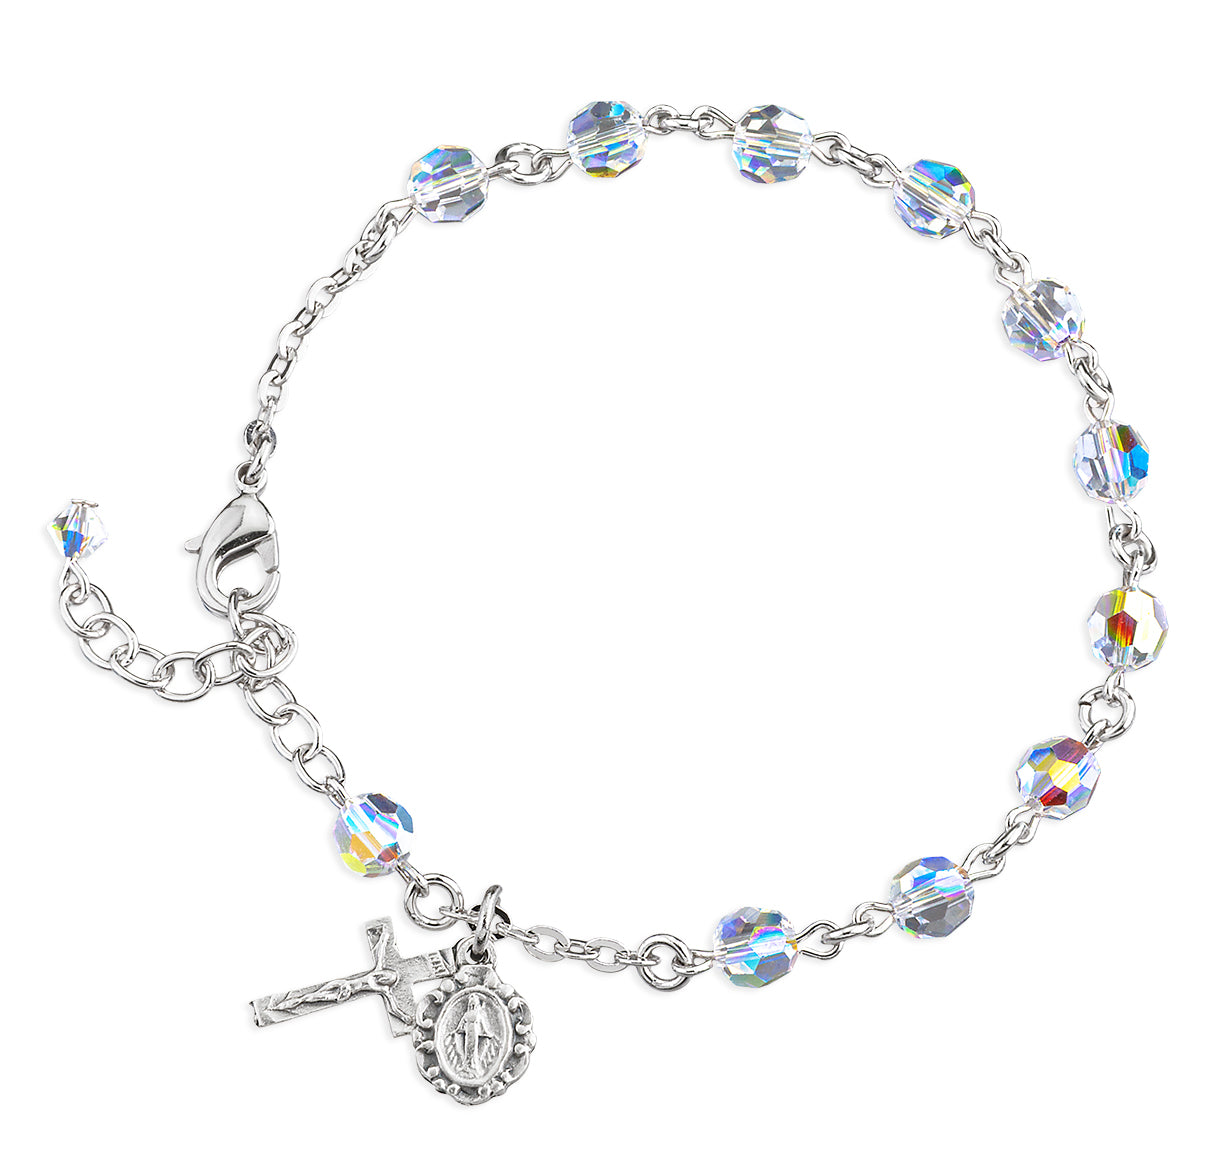 Round Crystal Rosary Bracelet Created with 6mm Swarovski Crystal Aurora Borealis Beads by HMH